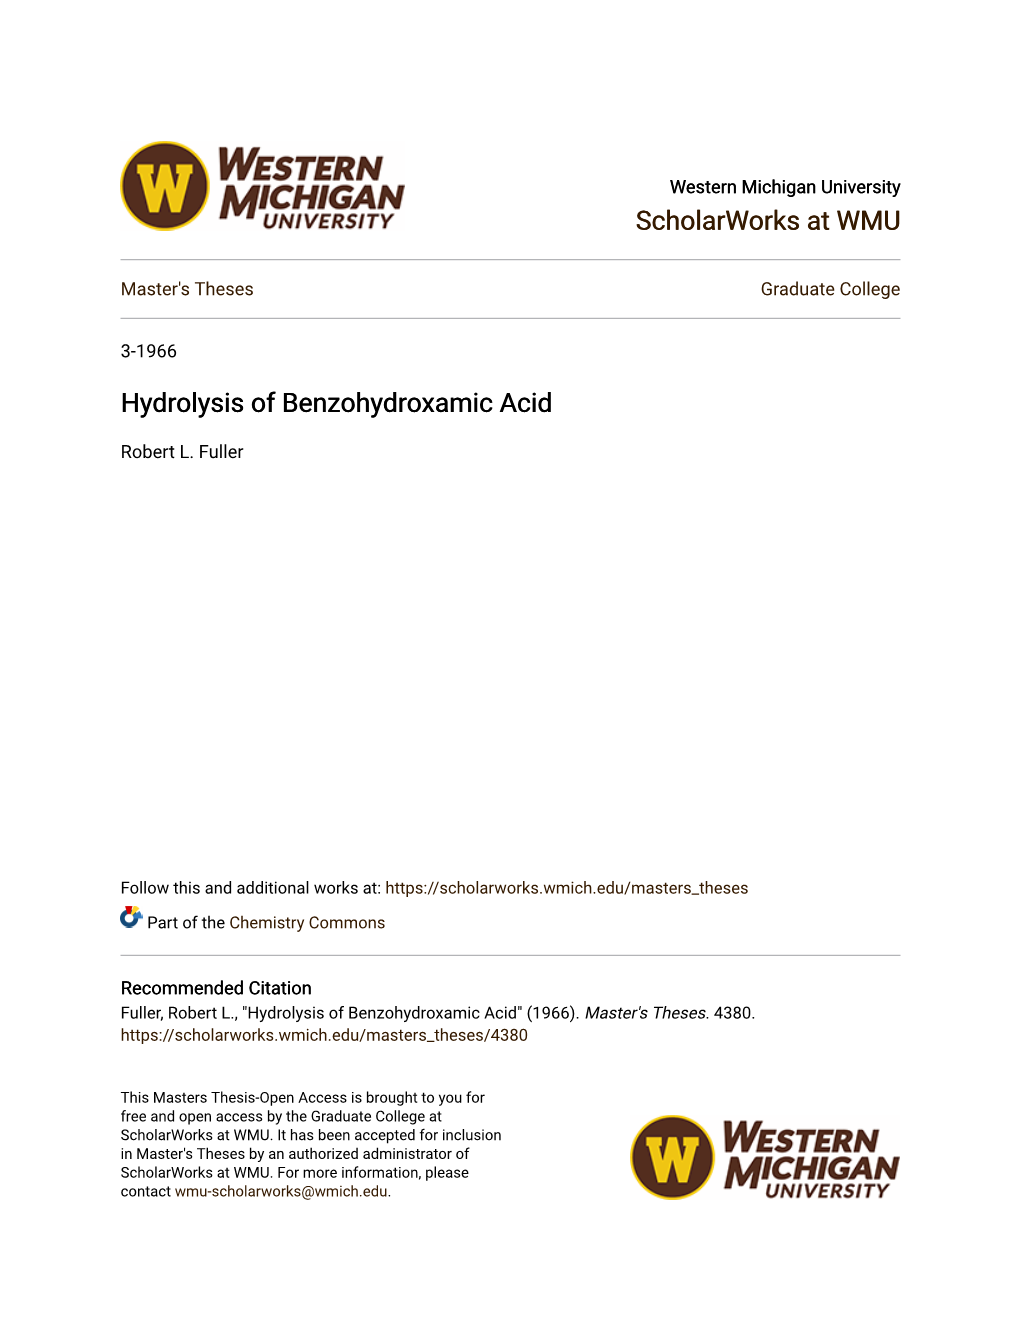 Hydrolysis of Benzohydroxamic Acid